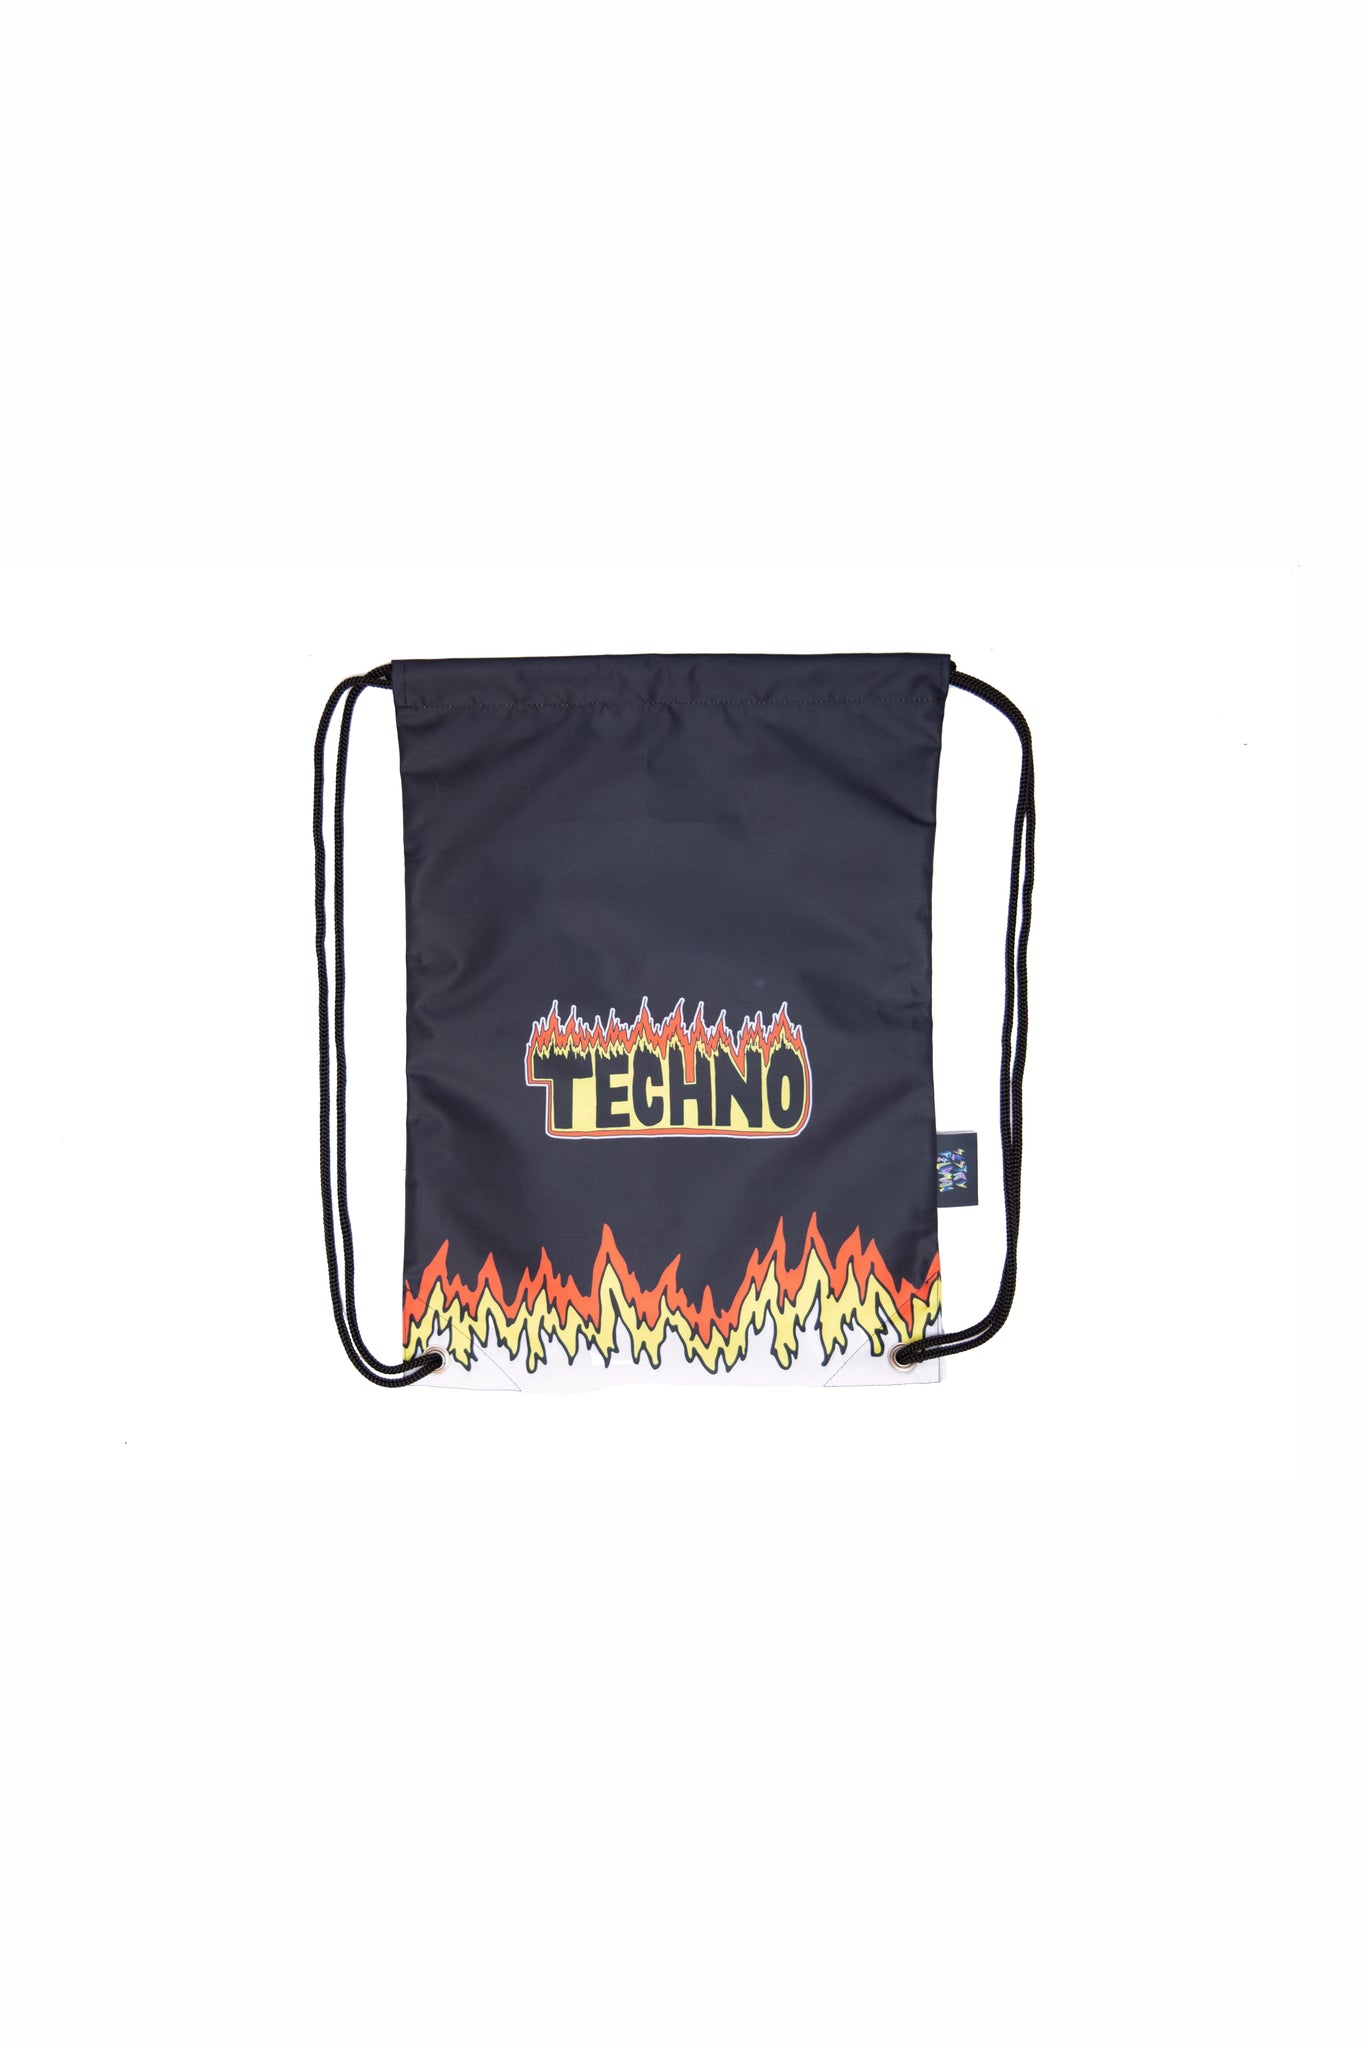 Techno Fuel Backpacks